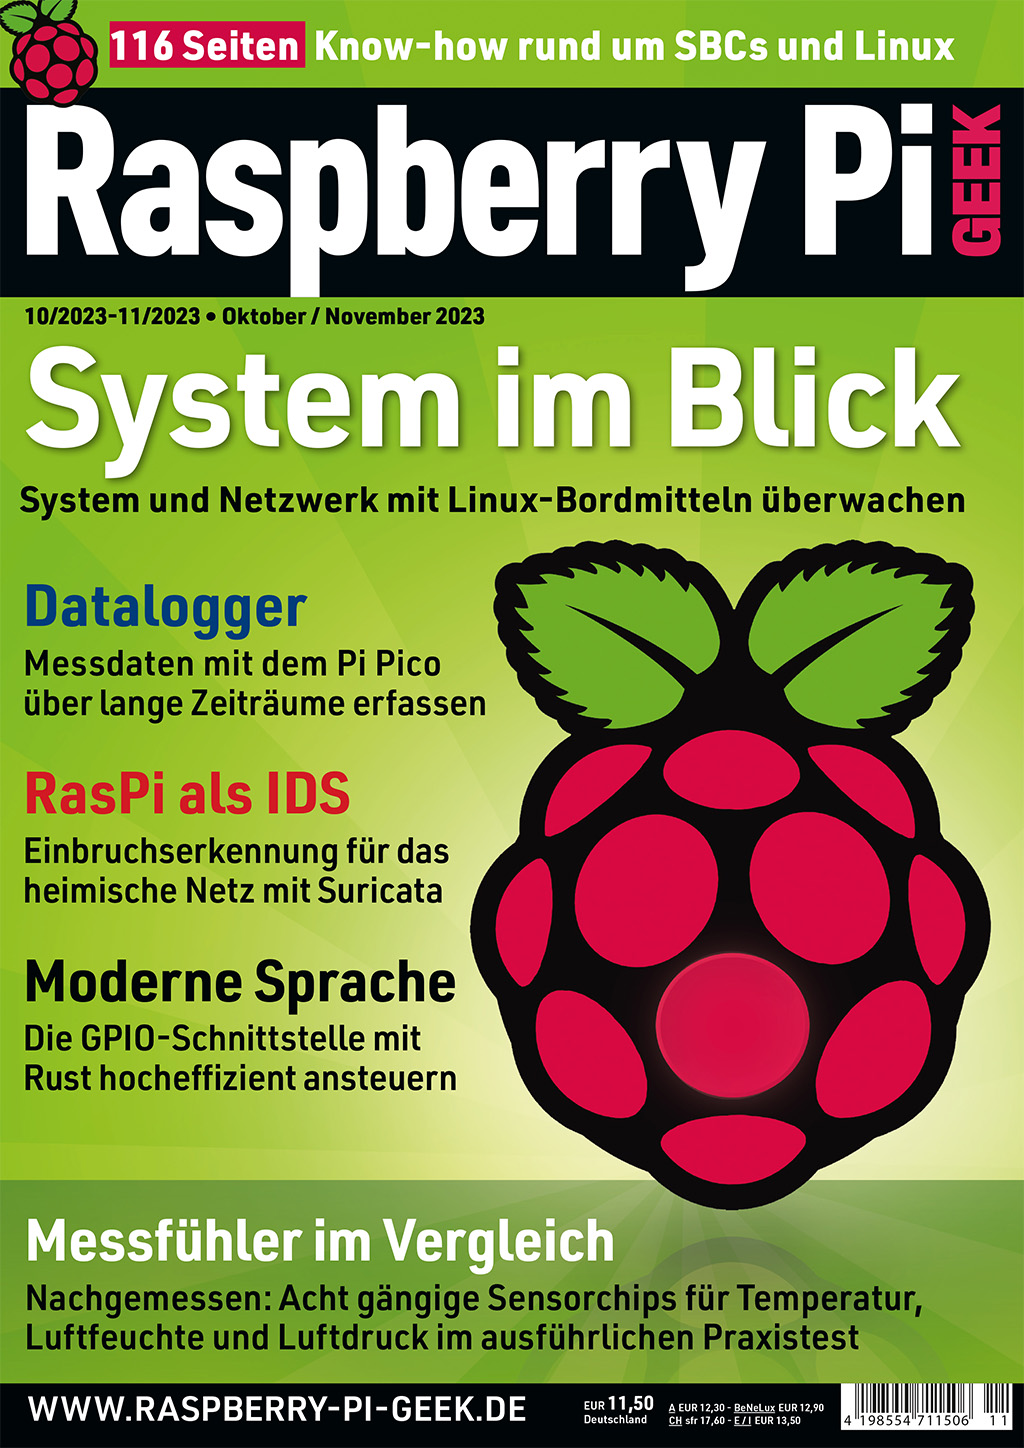 Raspberry Pi Geek ePaper 11/2023